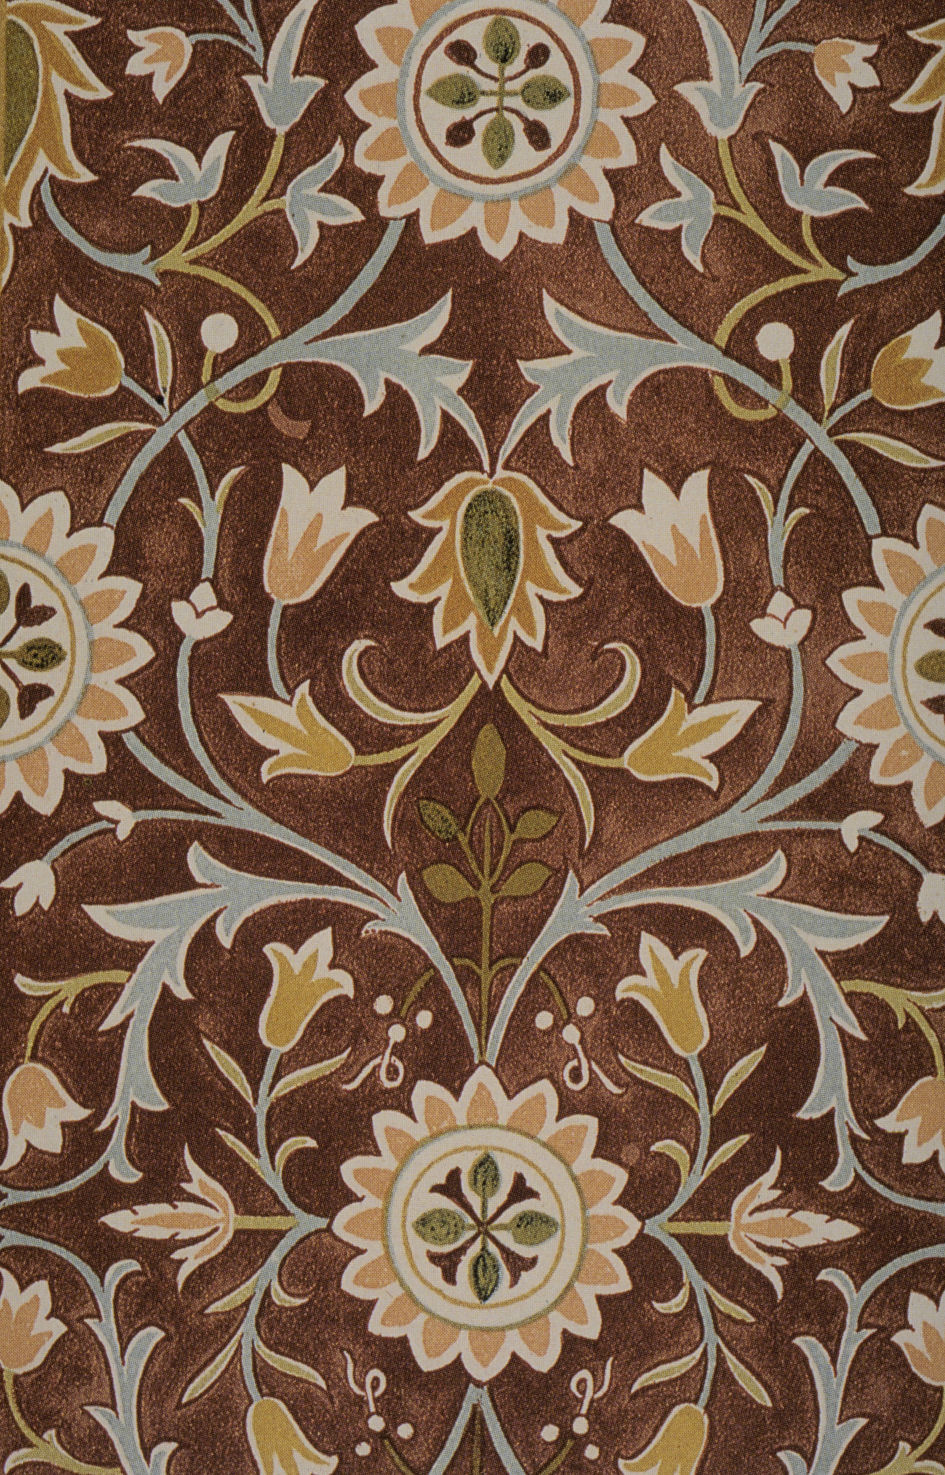 carpet design images file:morris little flower carpet design detail.jpg DRJGMUV